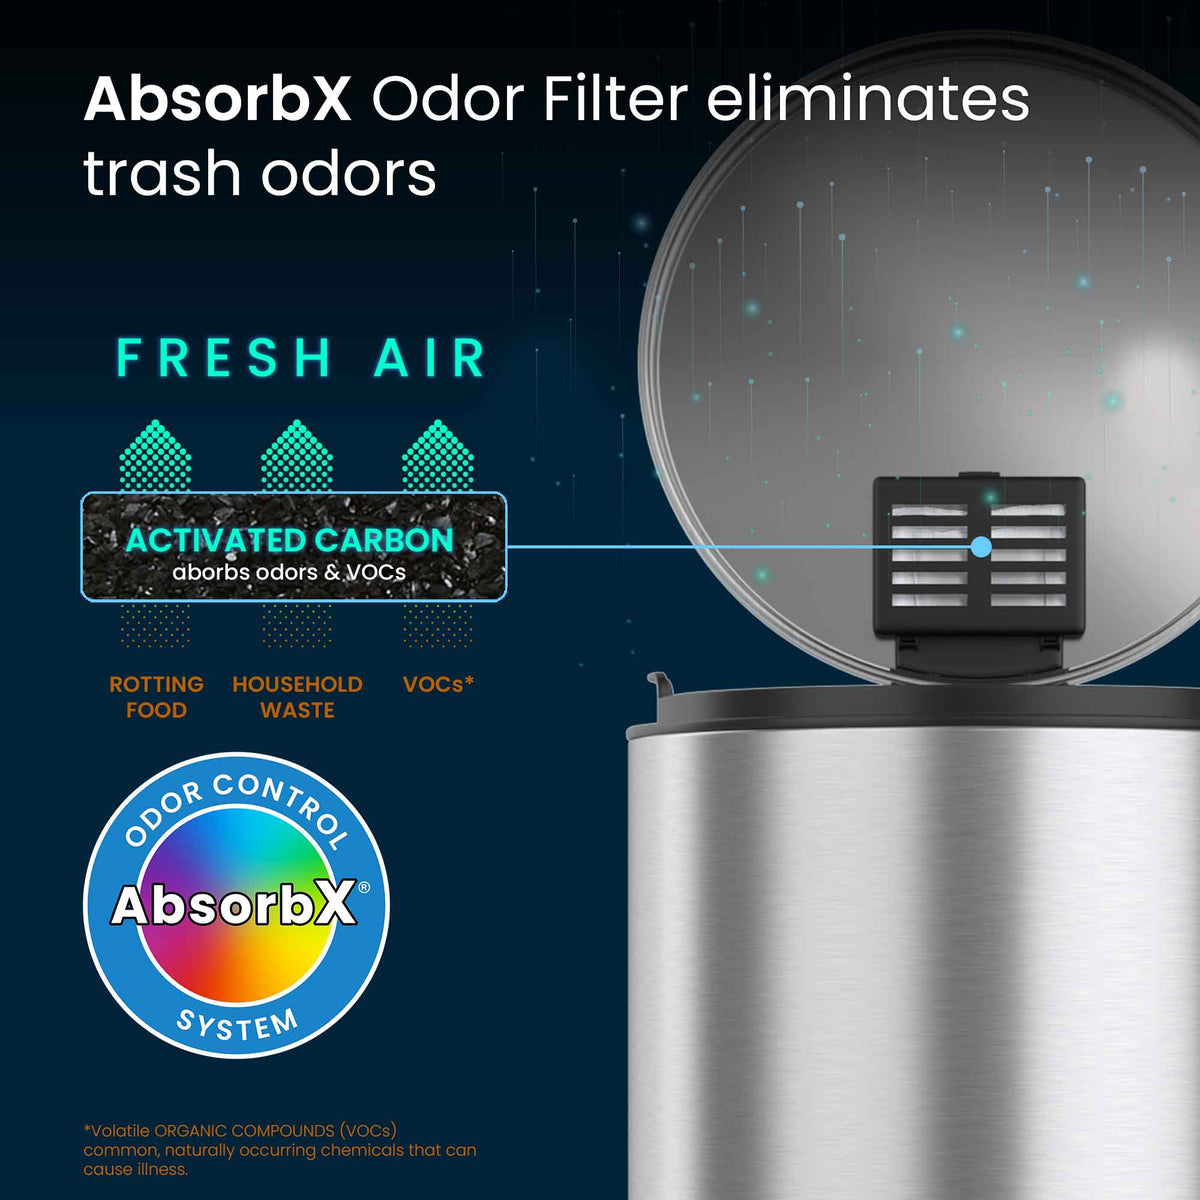 8 Gallon / 30 Liter SoftStep Round Step Pedal Trash Can AbsorbX Odor Filter eliminates trash odors